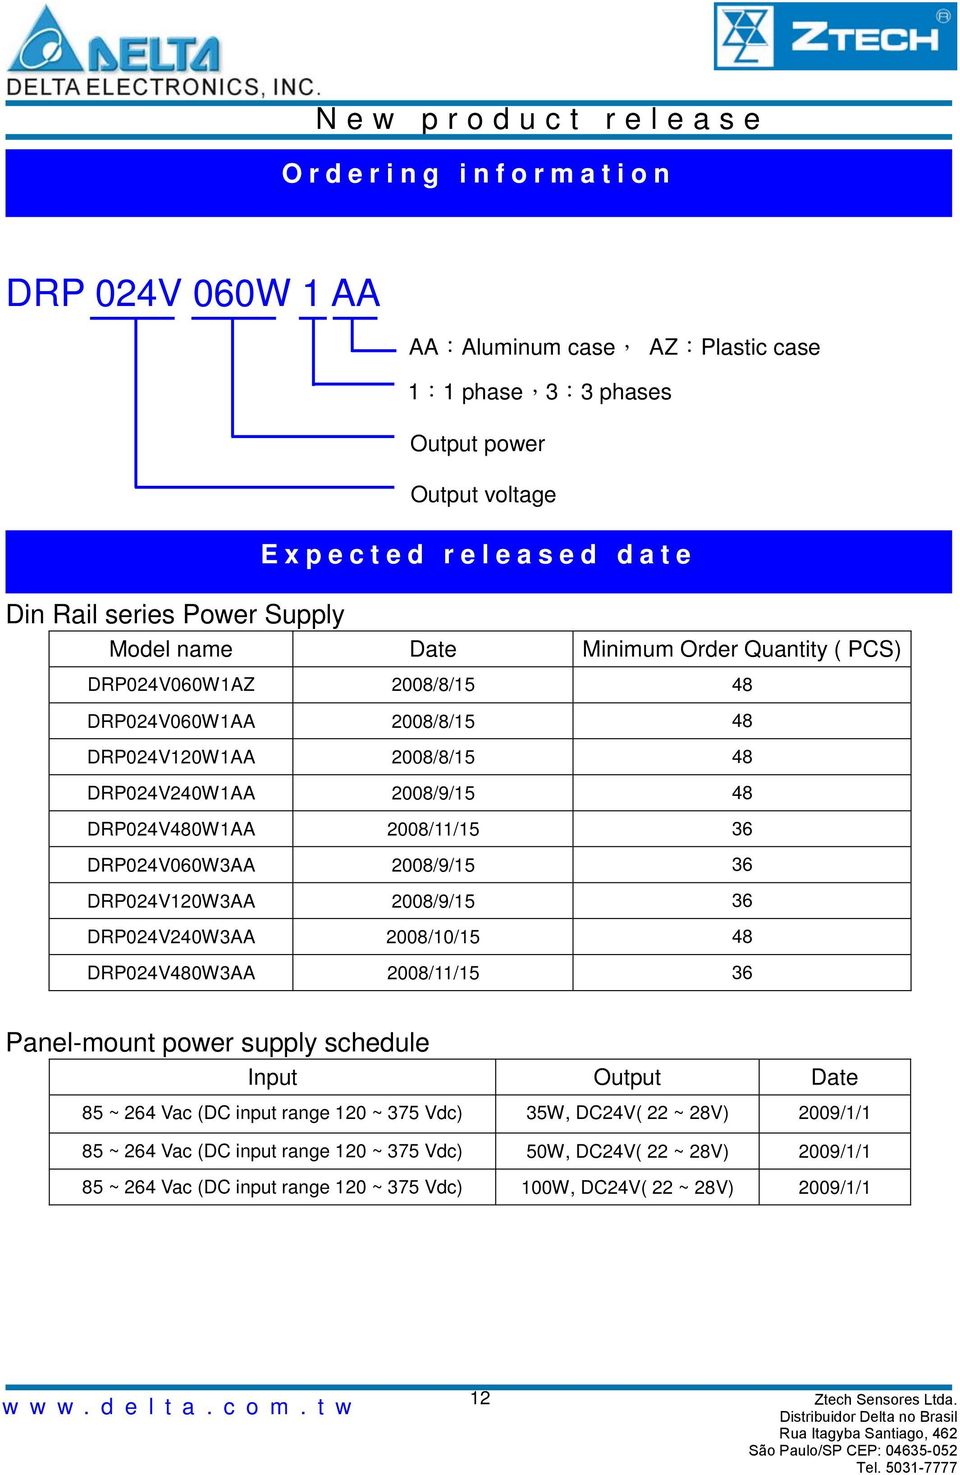 DRP024V060W3AA 2008/9/15 36 DRP024V120W3AA 2008/9/15 36 DRP024V240W3AA 2008/10/15 48 DRP024V480W3AA 2008/11/15 36 Panel-mount power supply schedule Input Output Date 85 ~ 264 Vac (DC input